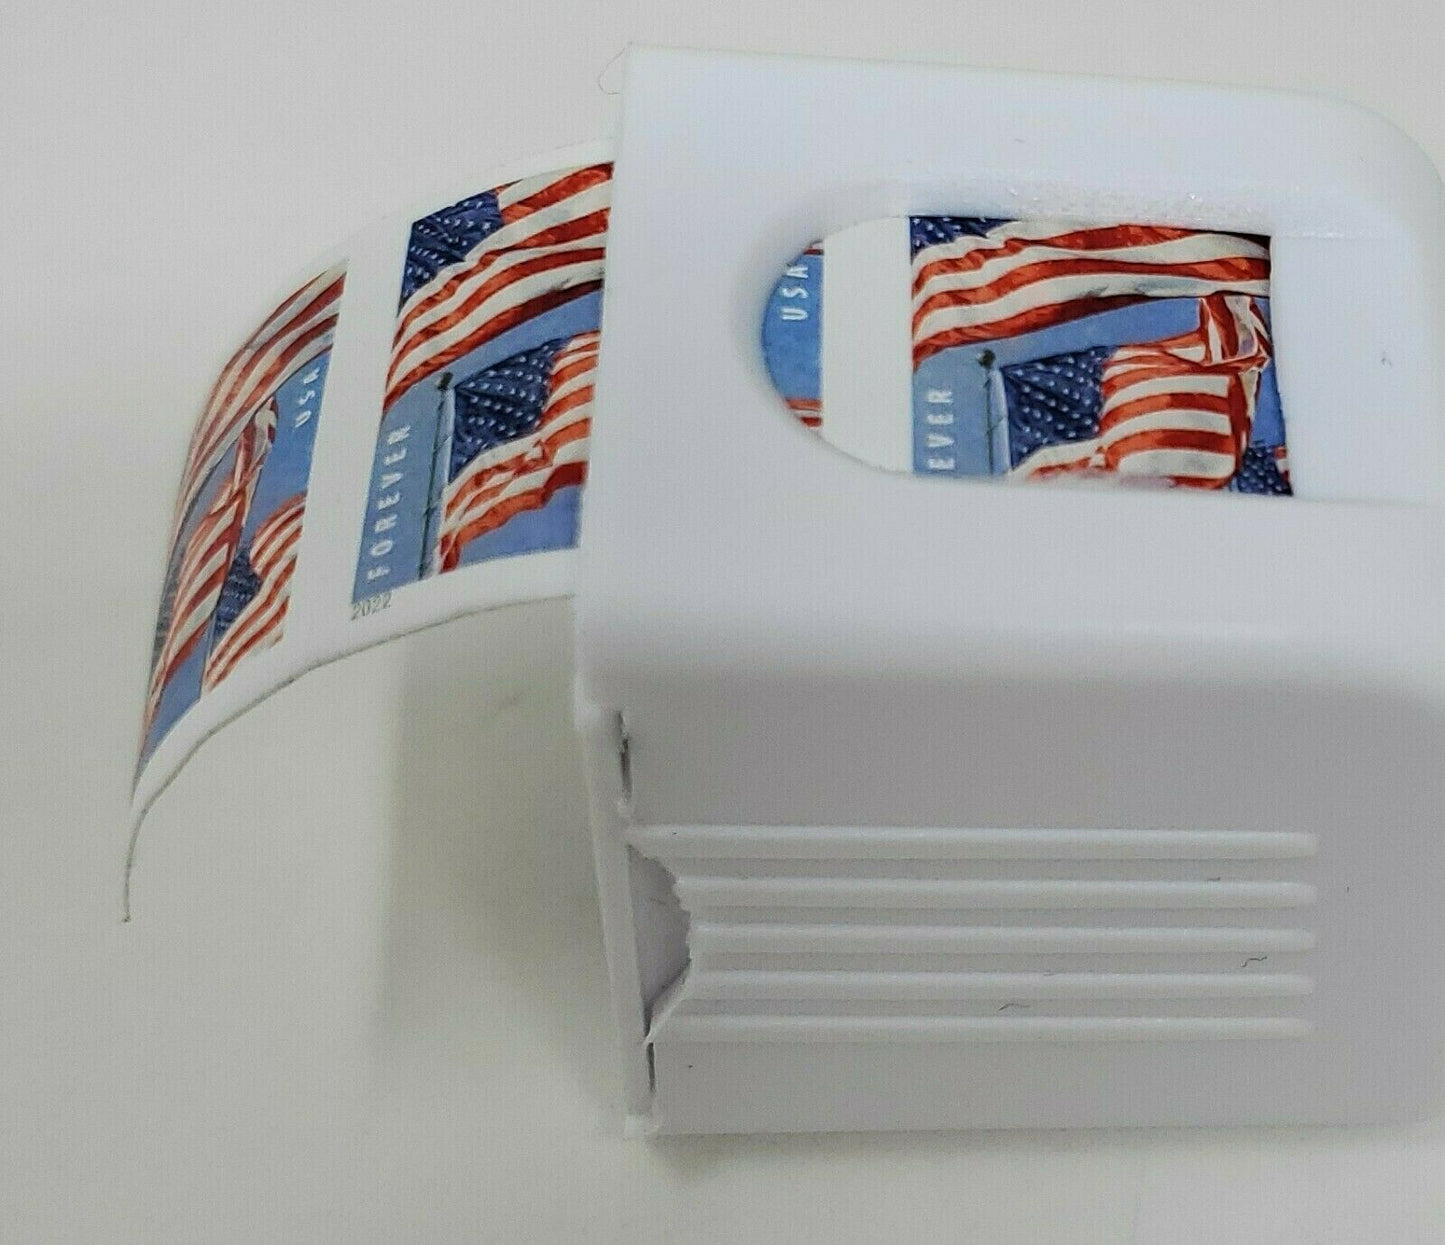 A Roll of 100 Forever Stamp Dispenser, Holder for Stamps Postage